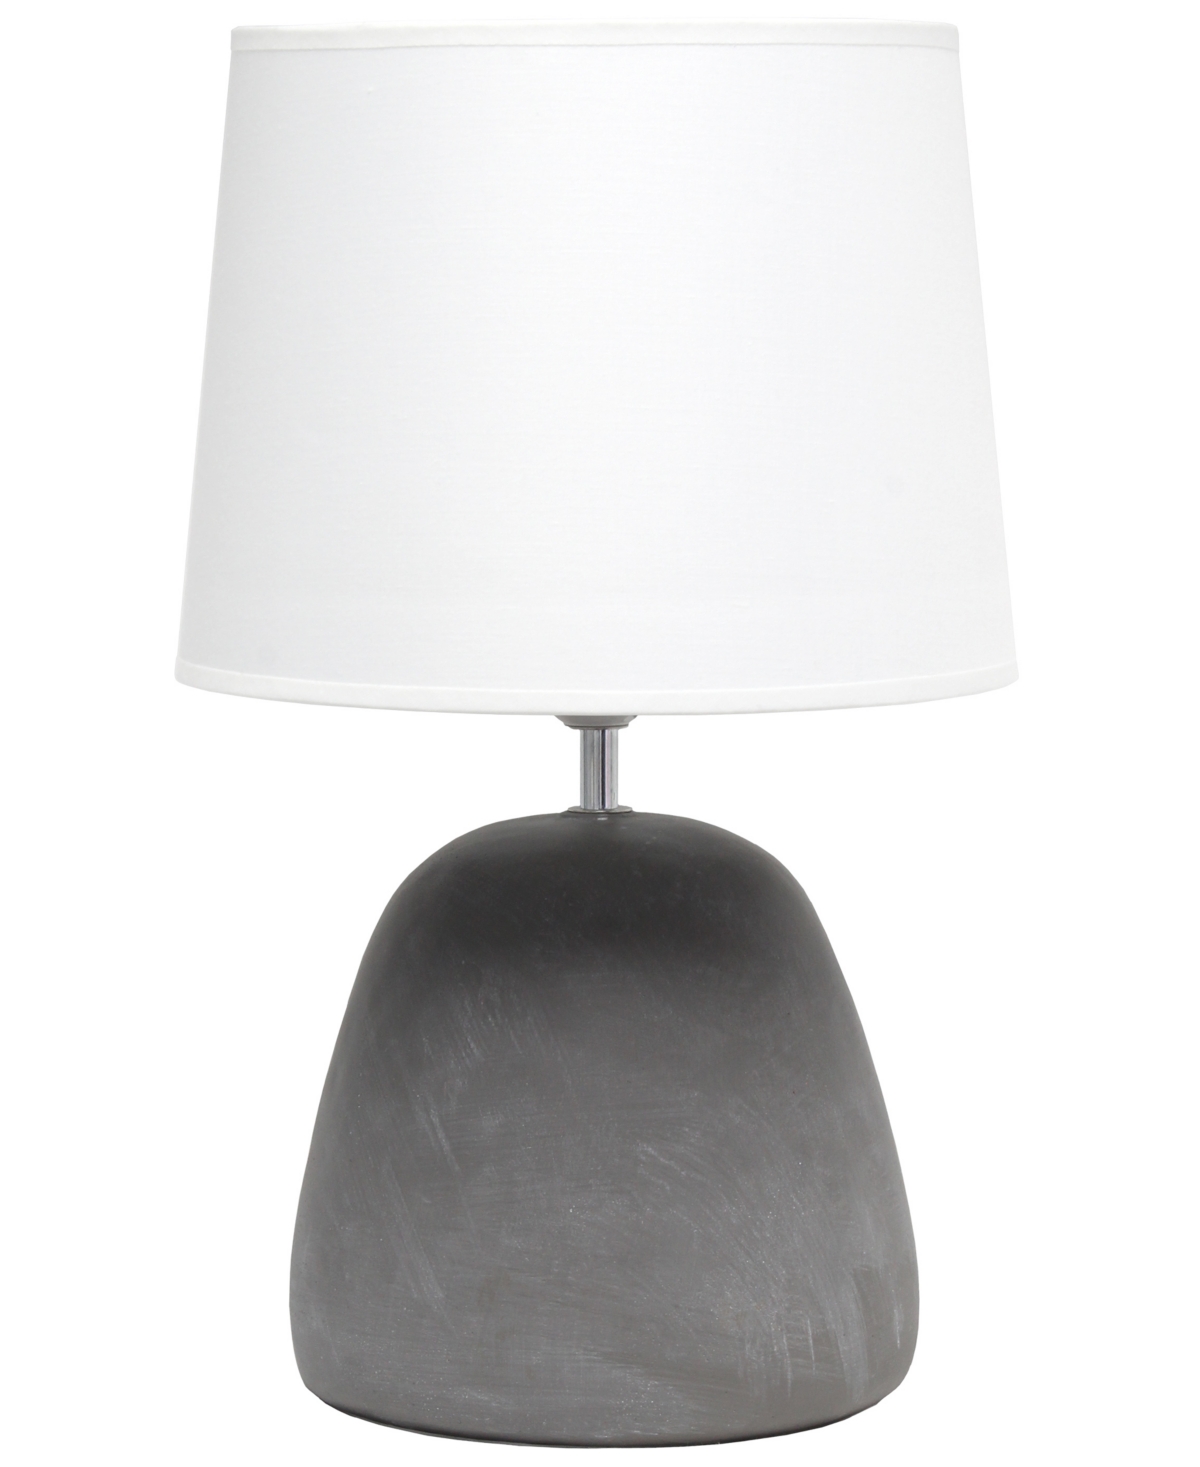 Simple Designs Round Concrete Table Lamp In White